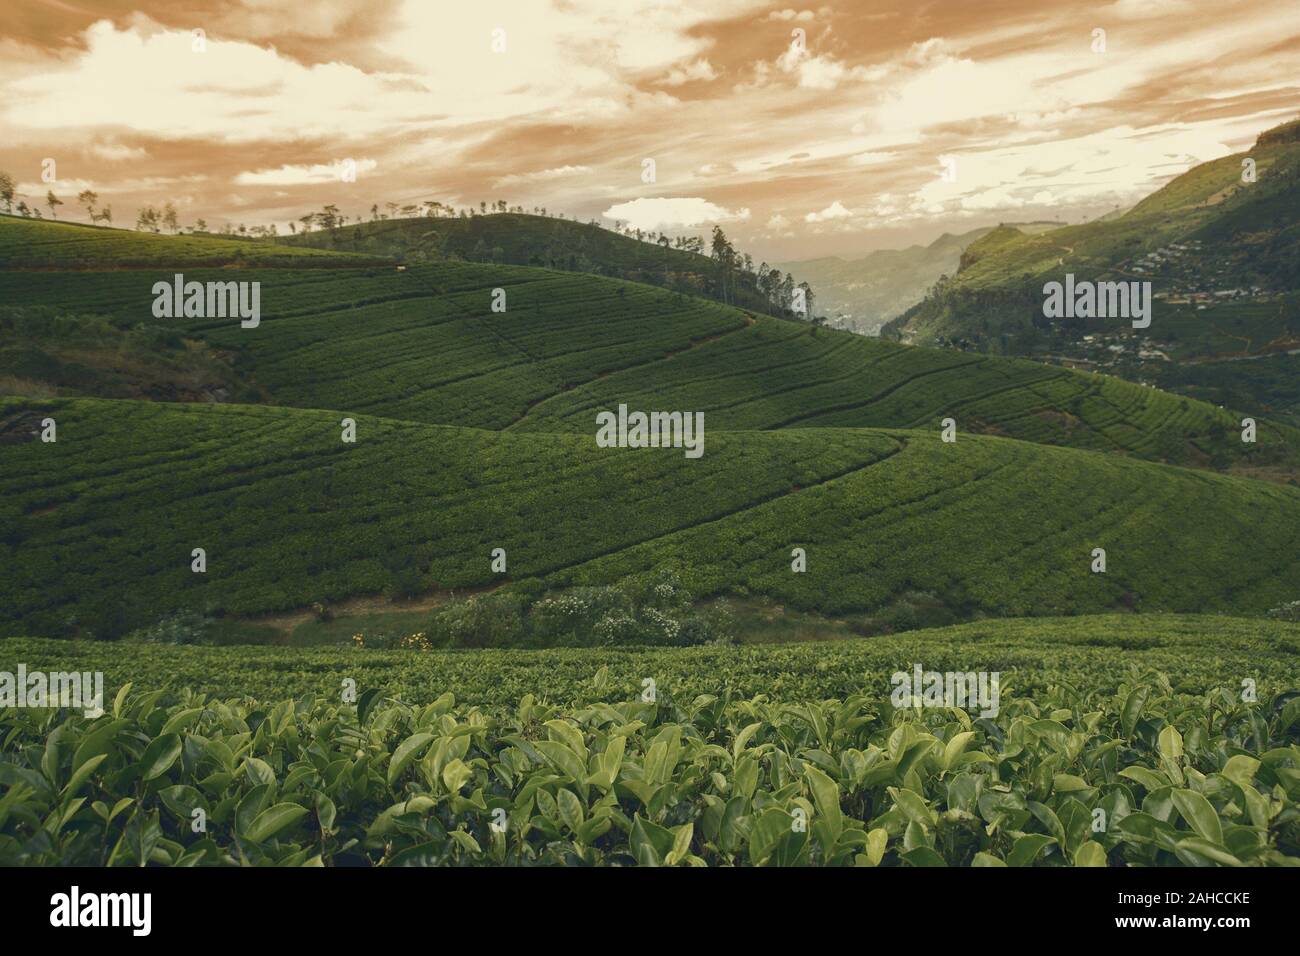 sunset in tea plantation countryside Stock Photo